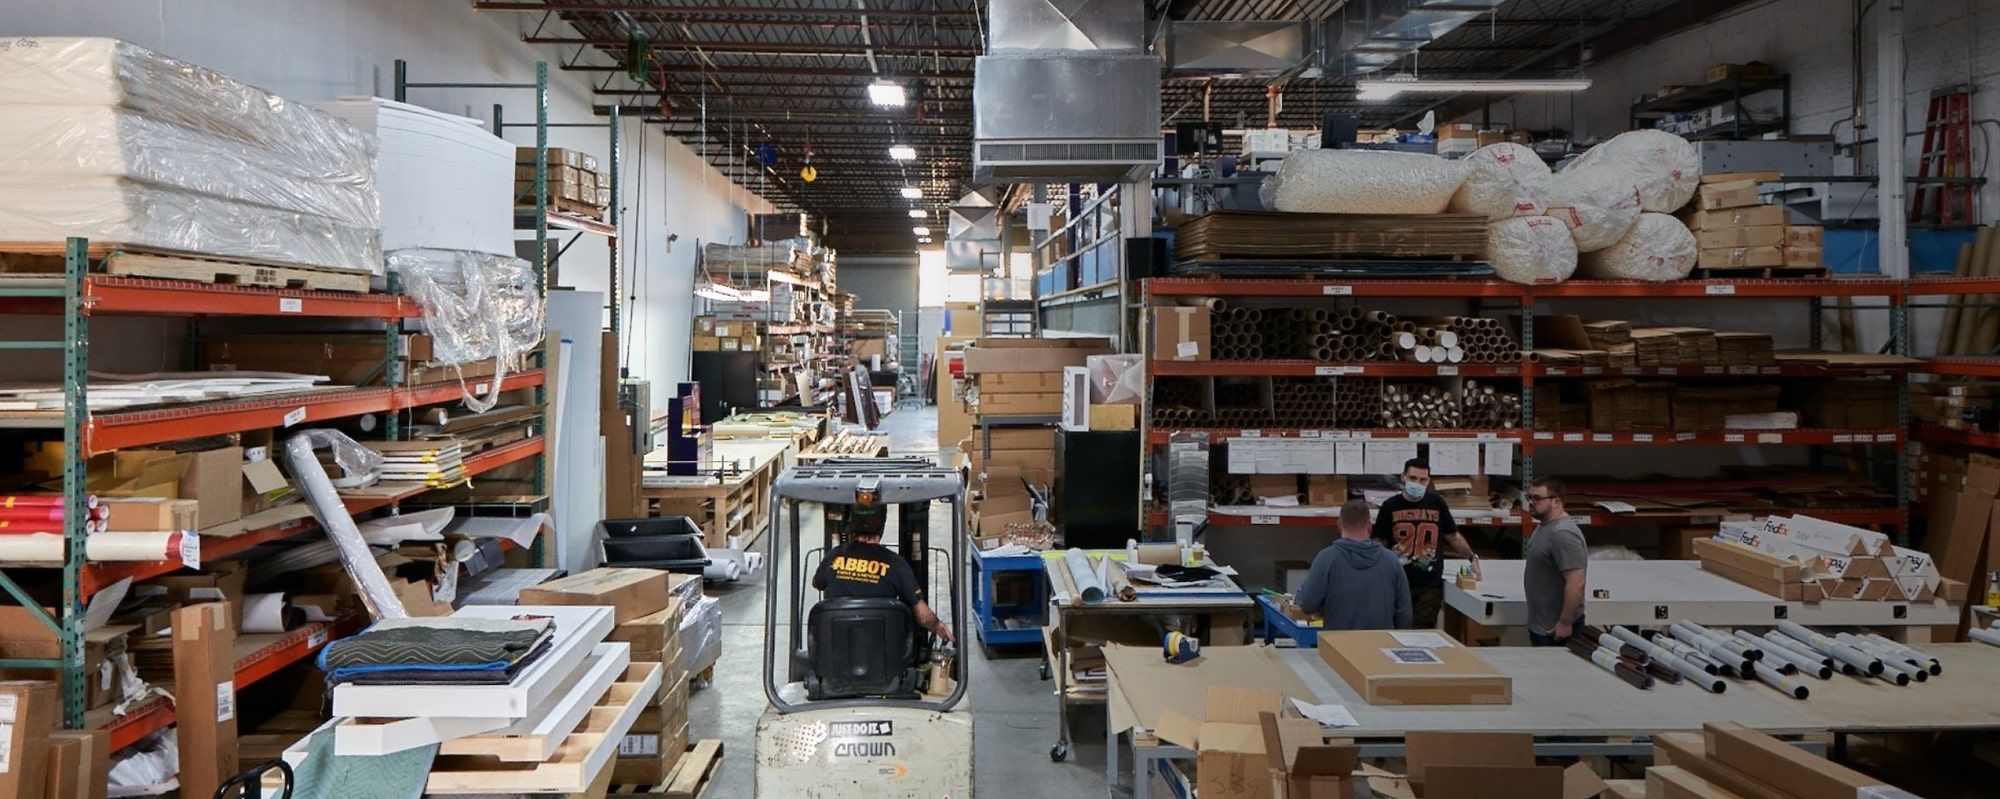 Interior of Volume Industries warehouse